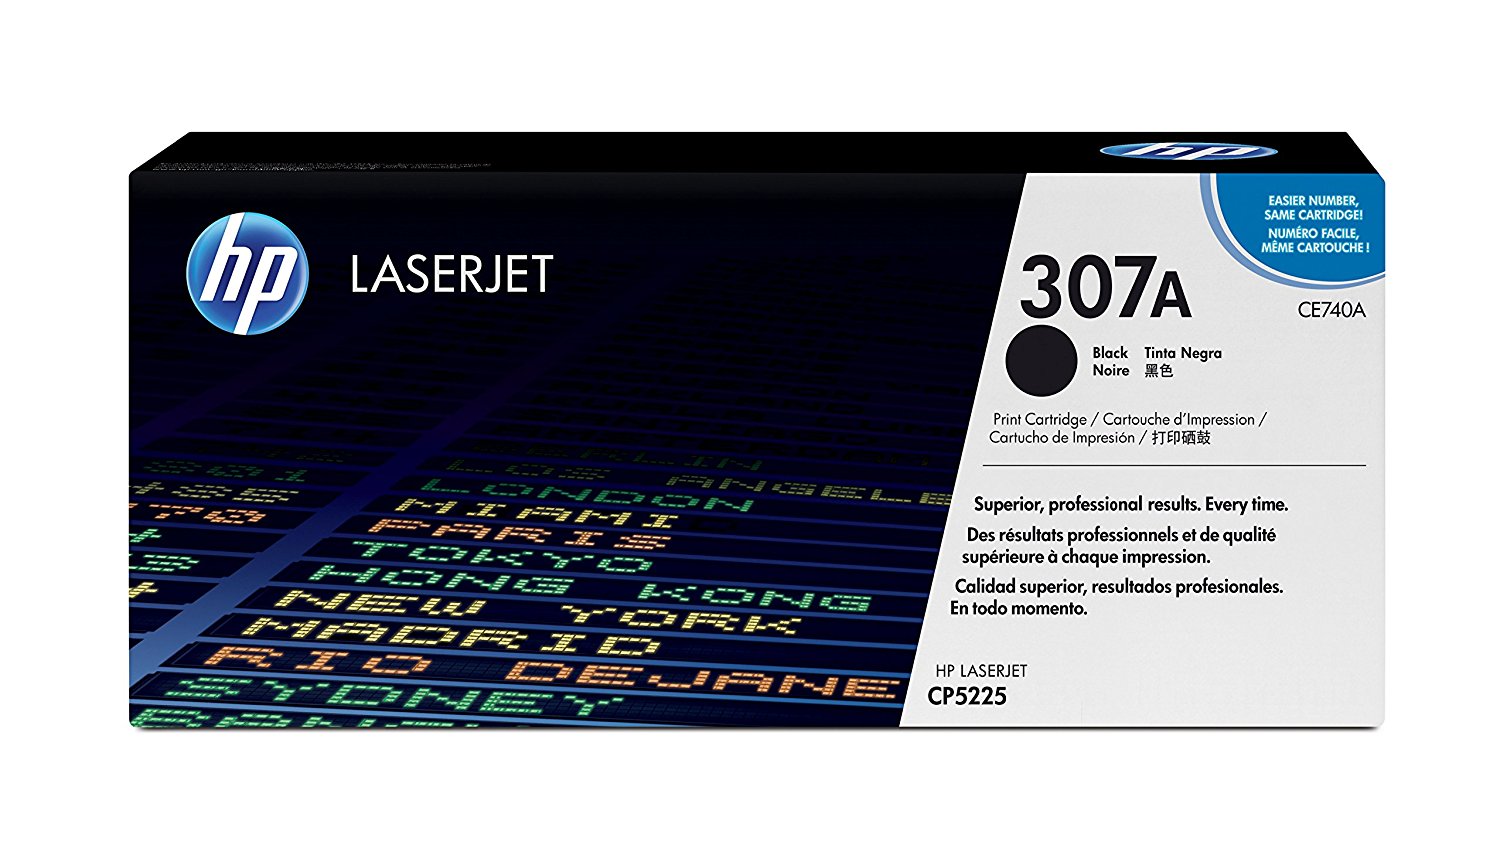 HP 307A (CE740A) Black Original Toner Cartridge for HP Color LaserJet CP5225